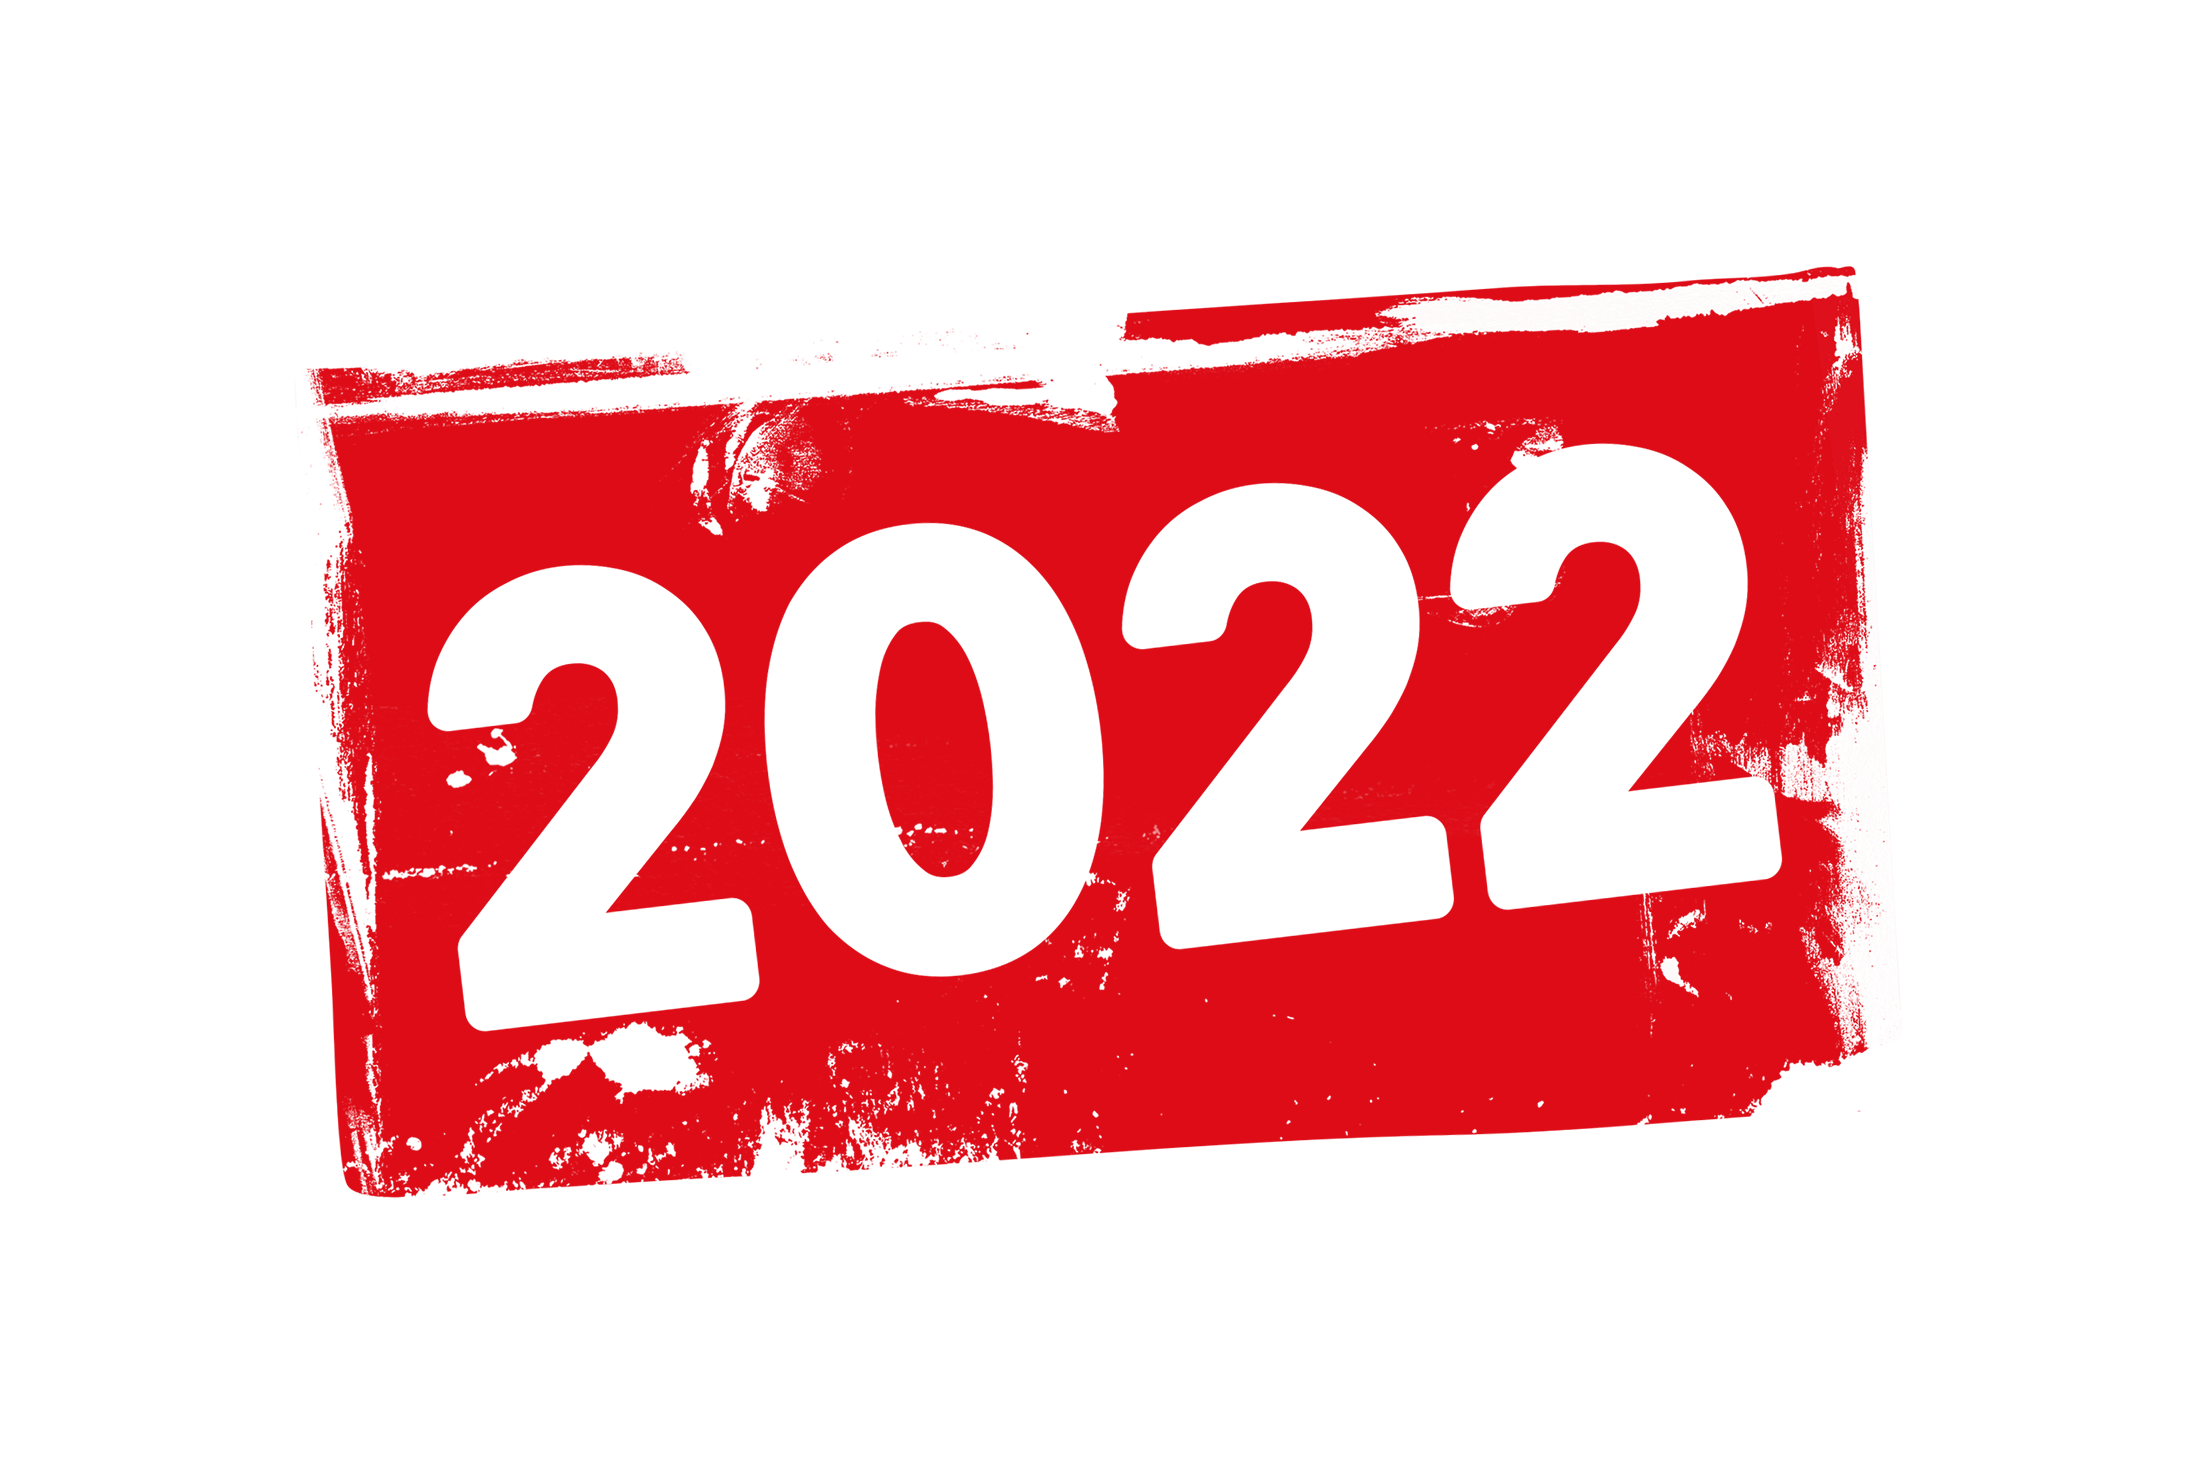 More information about "Καλή χρονιά, ευχές για ένα ελεύθερο και δημιουργικό 2022"